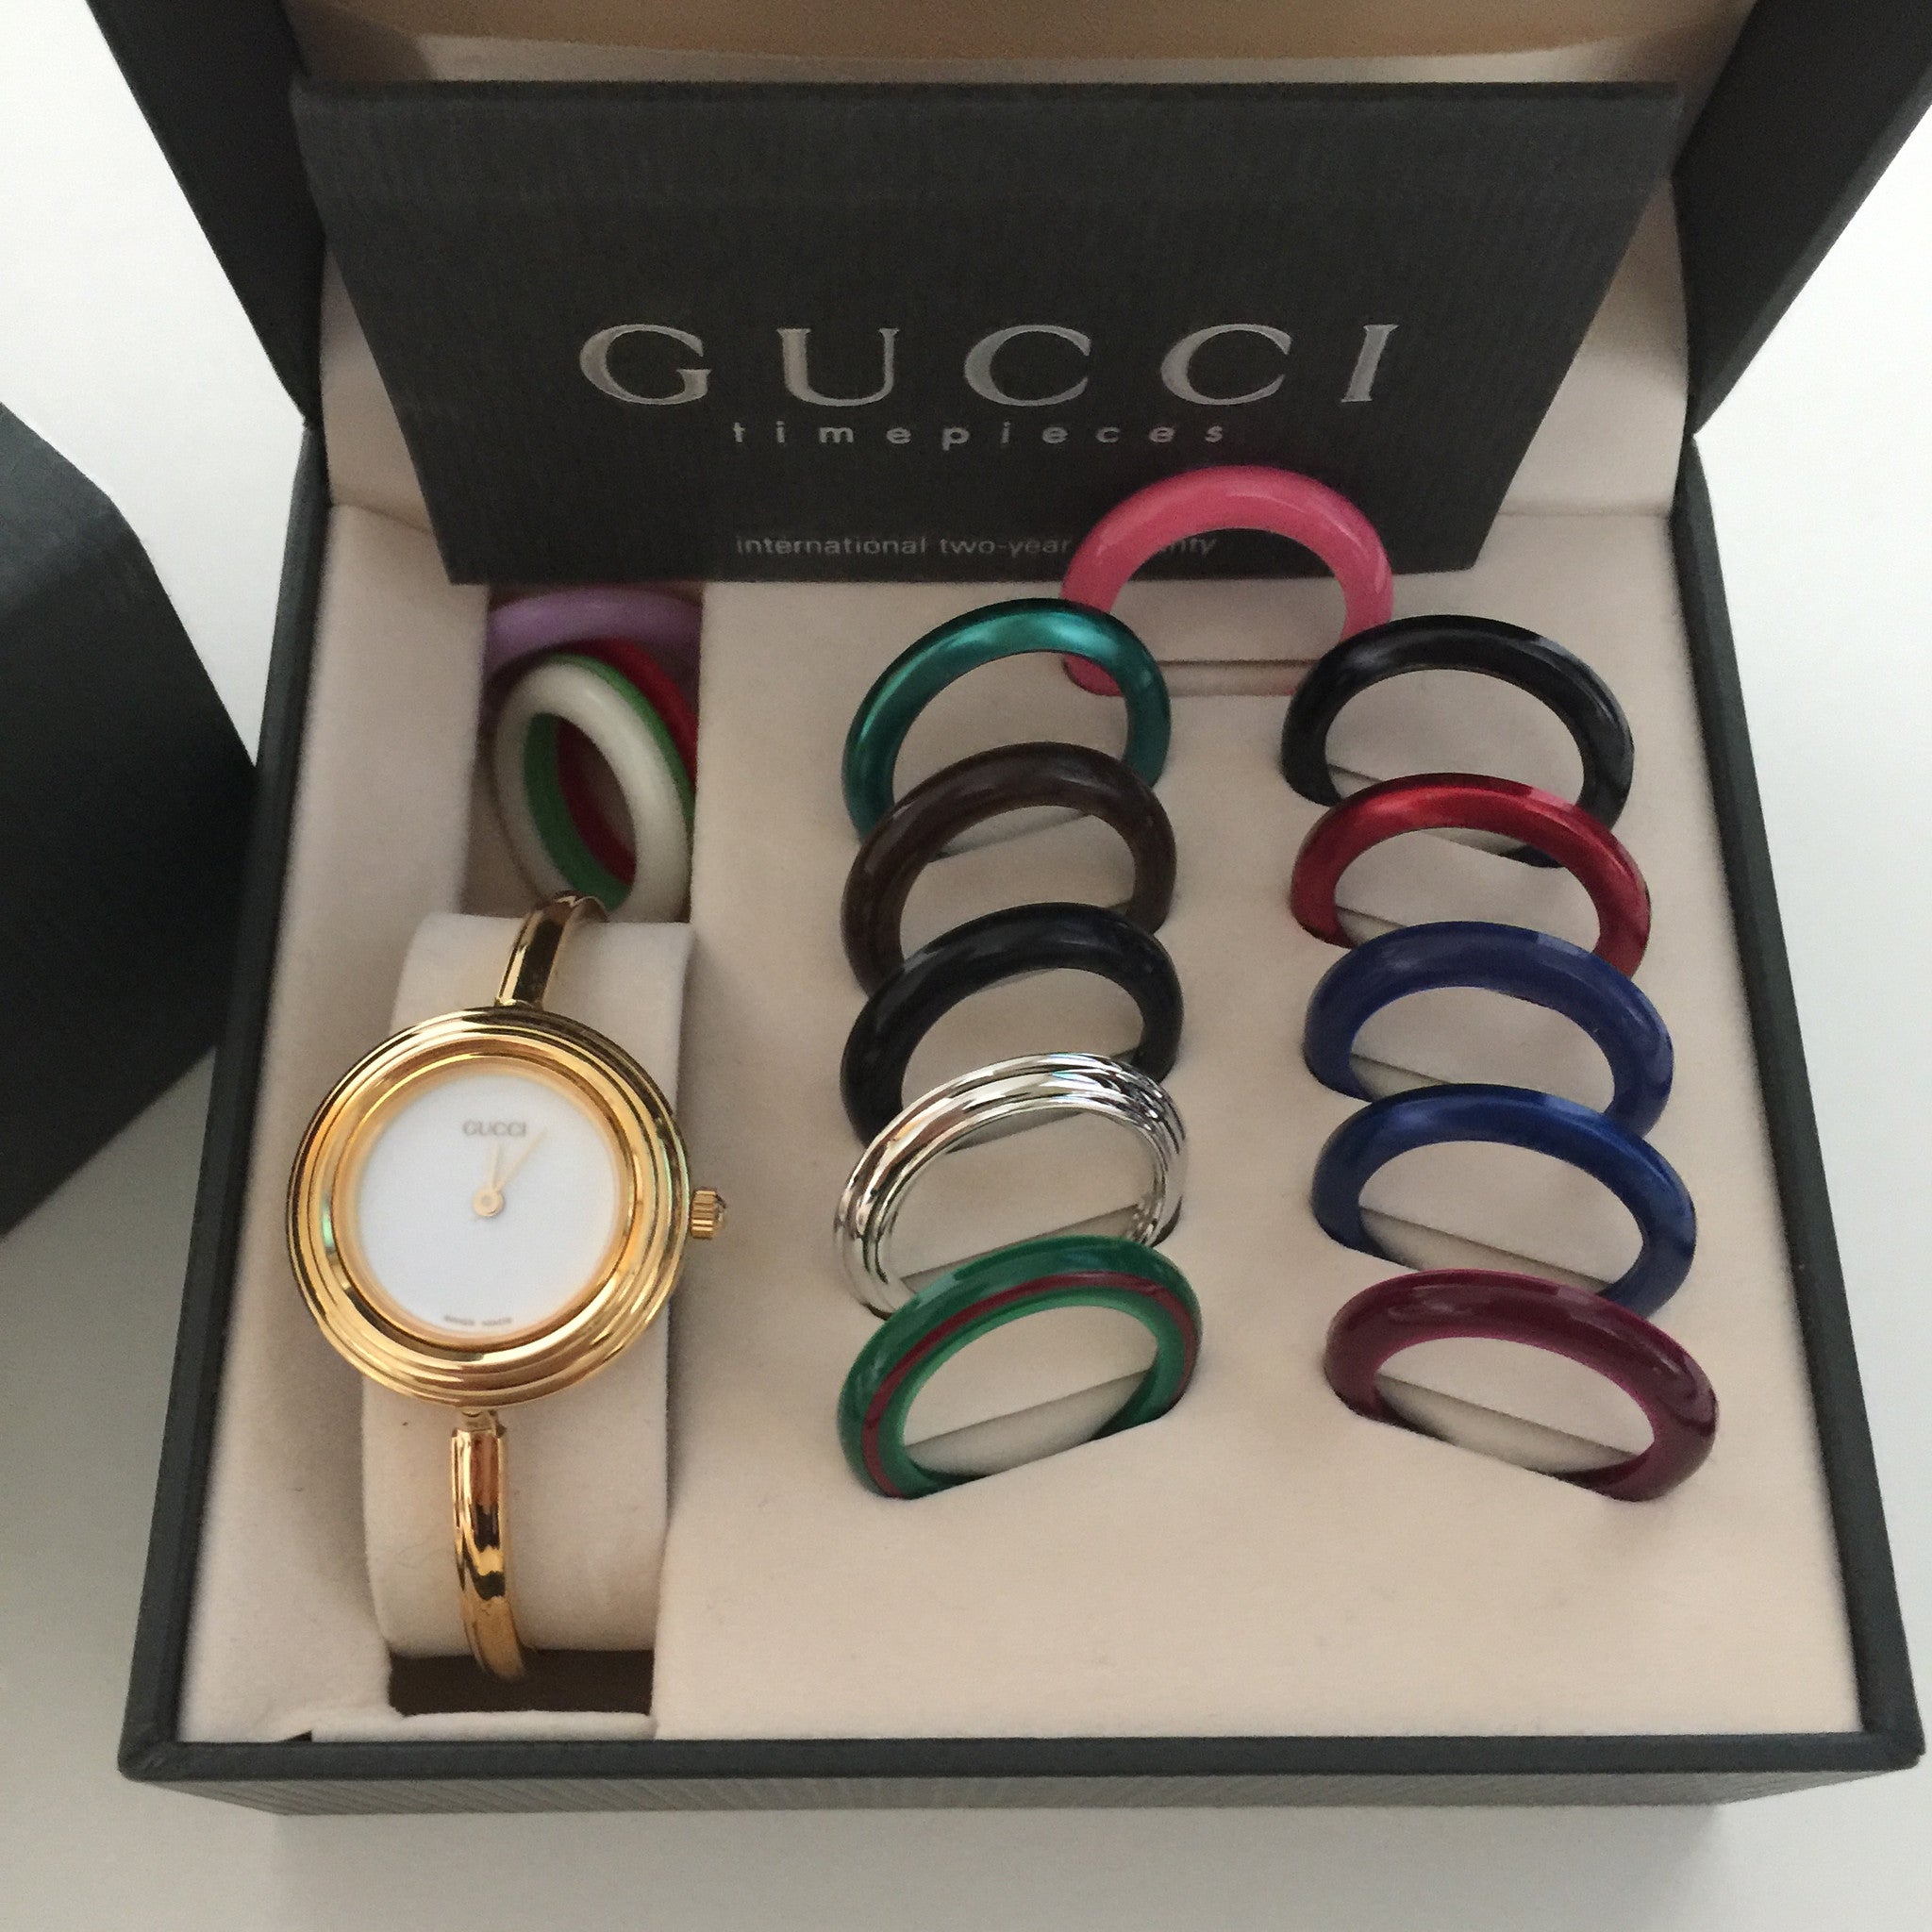 authentic vintage gucci watch